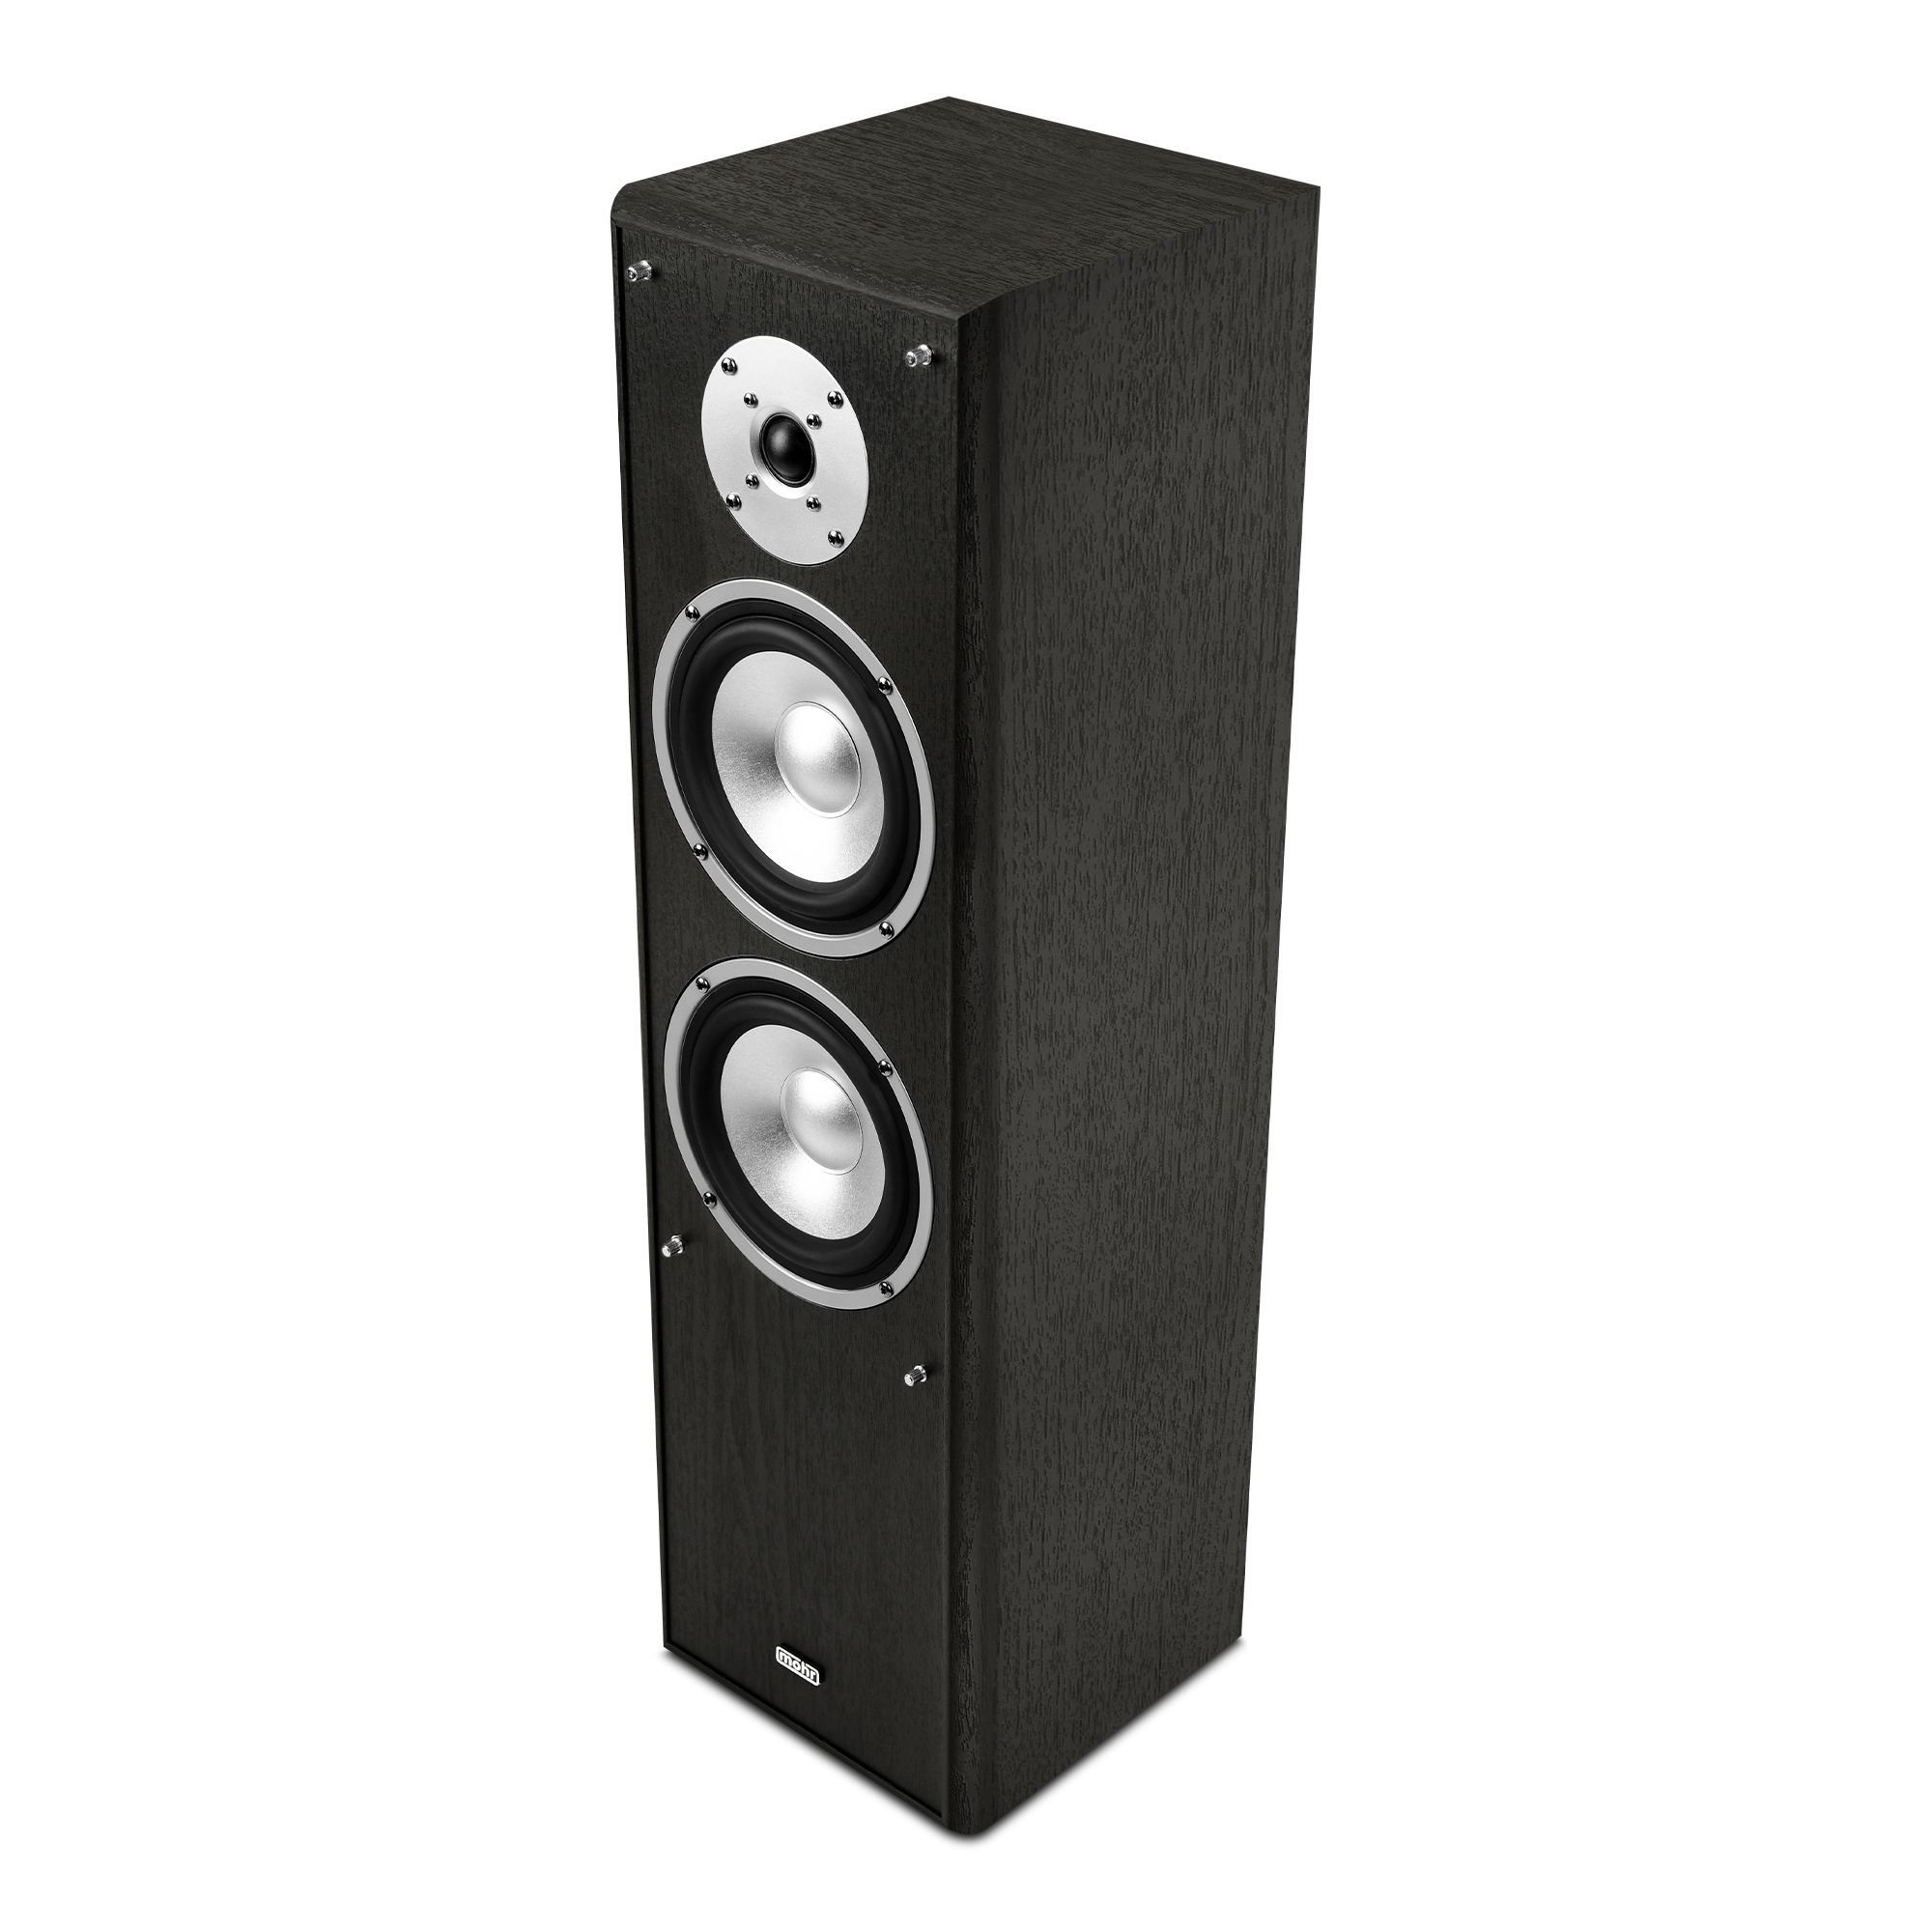 MOHR SL10, 1 HiFi Stereo Bass-Reflex, Standautsprecher 2-Wege schwarz Standlautsprecher, HiFi Paar, schwarz passiver